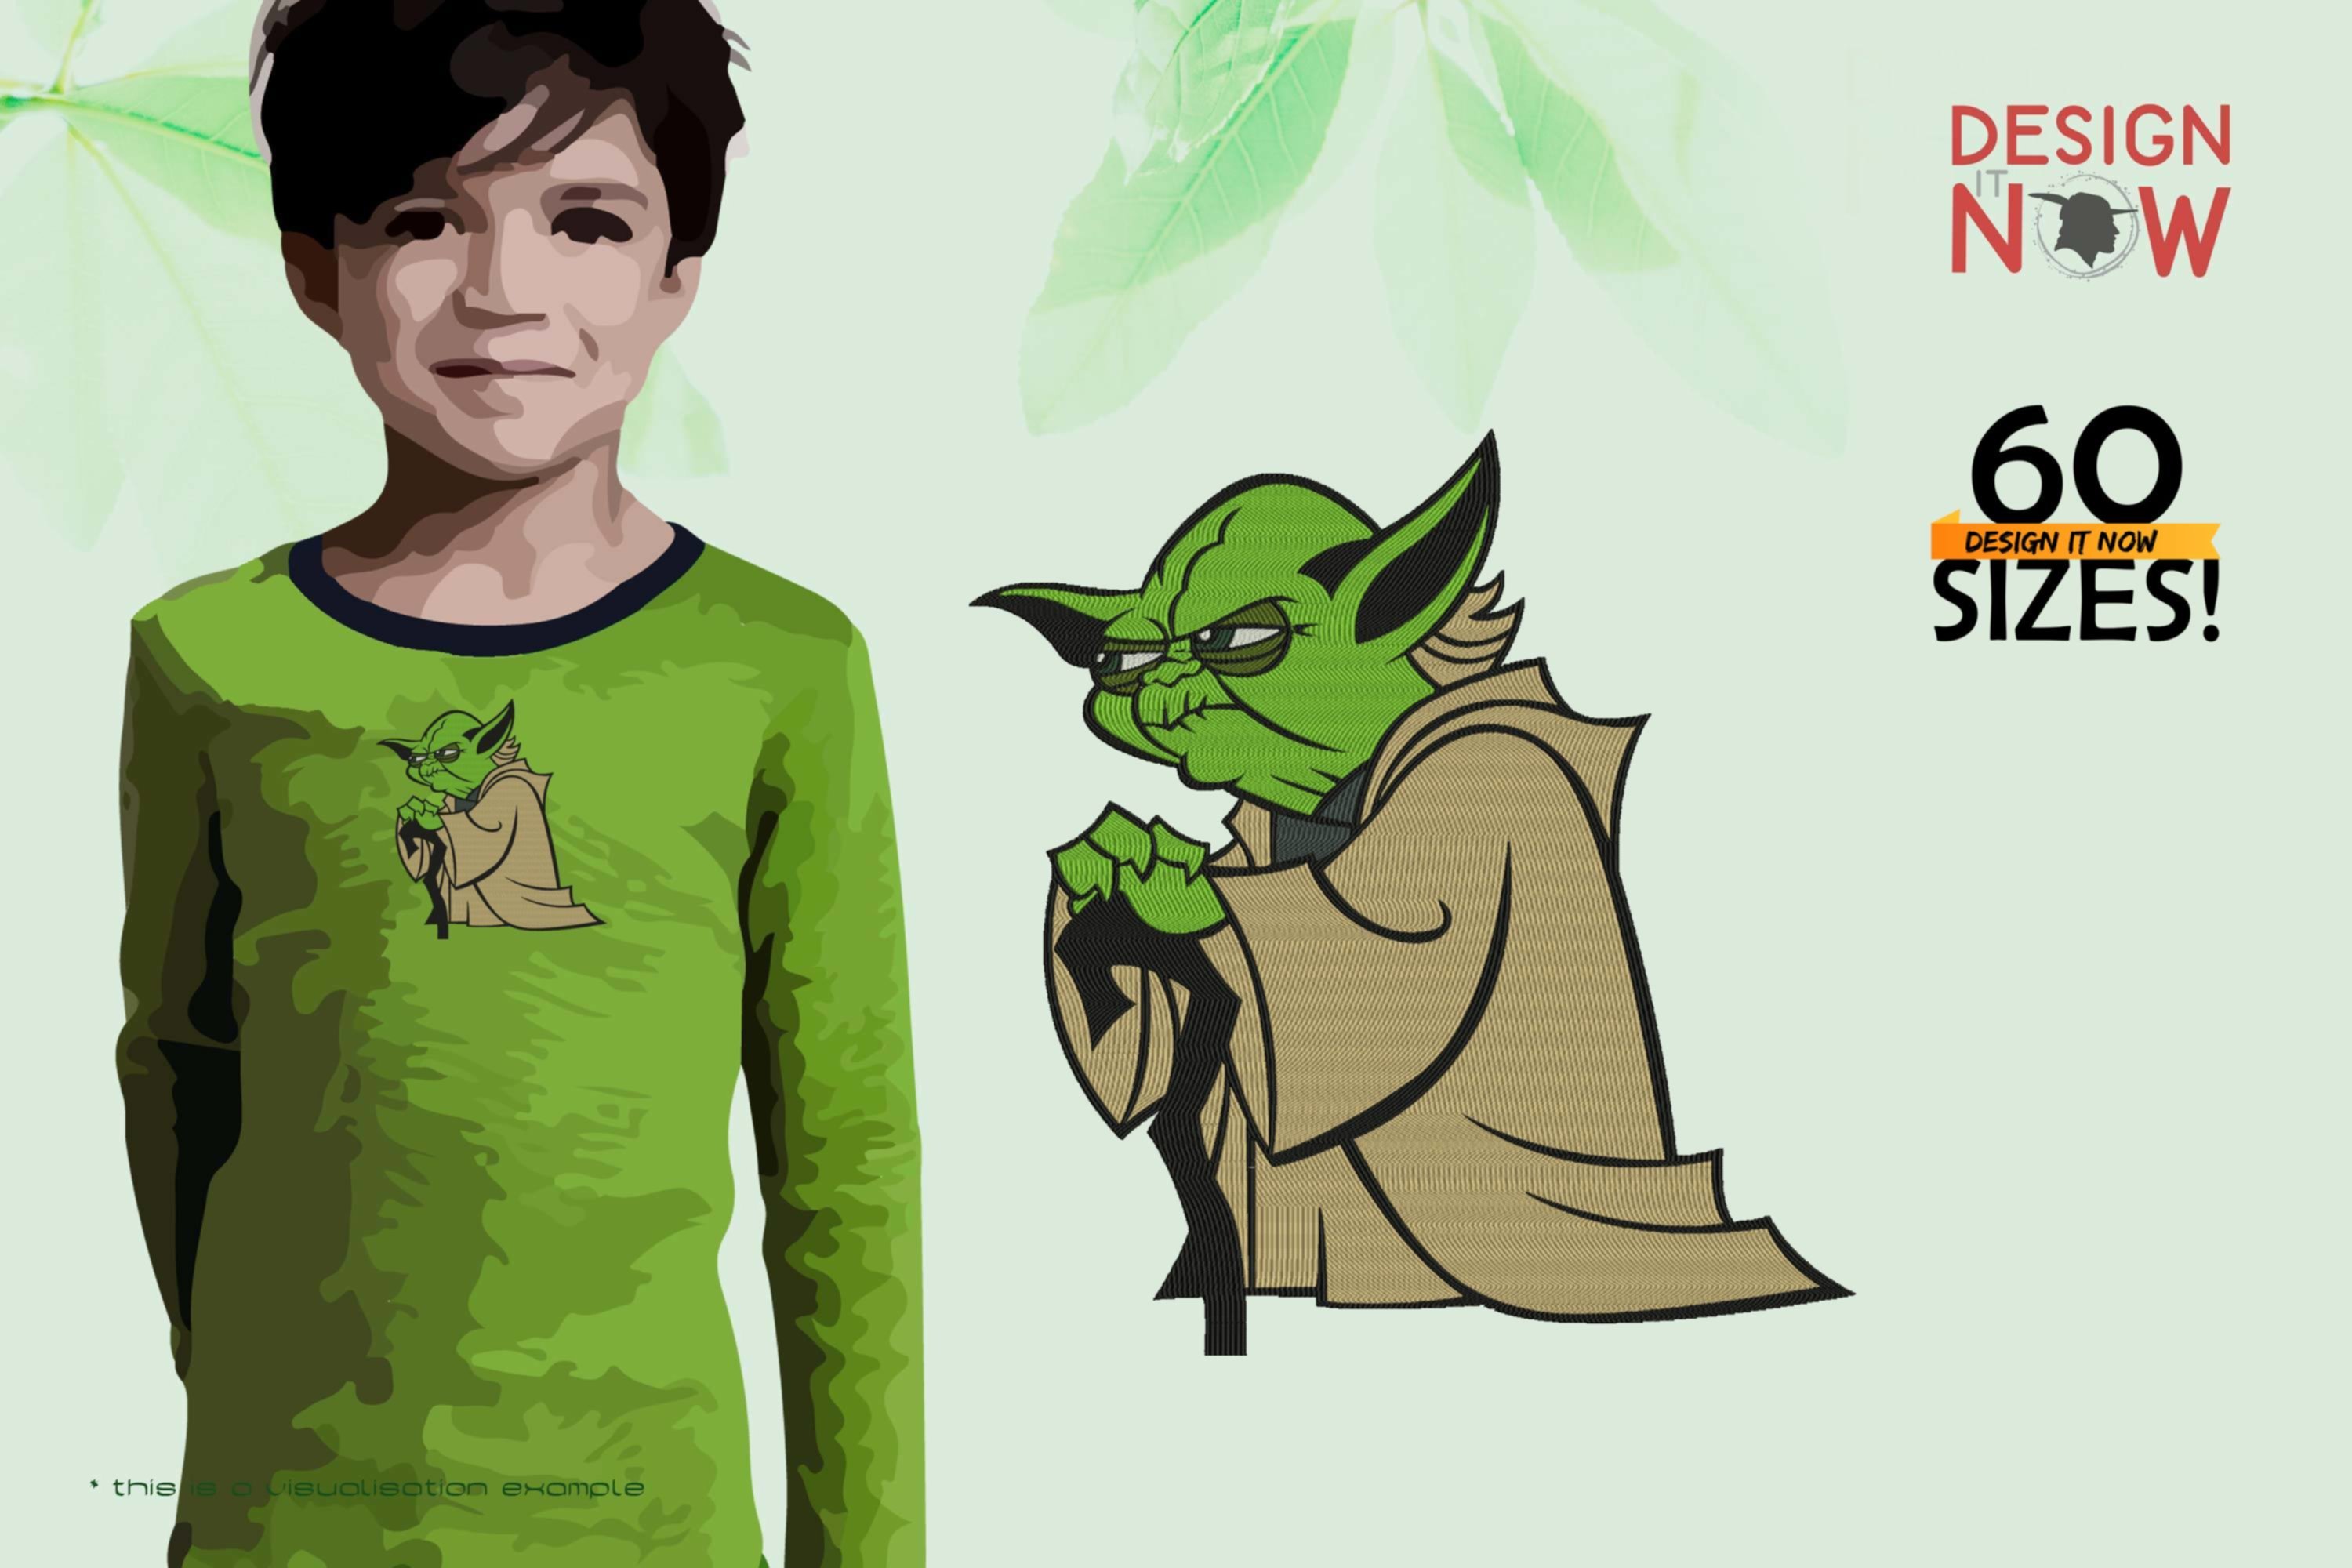  Tribute To Fictional Character Minch Yoda aka Yoda (Profile)